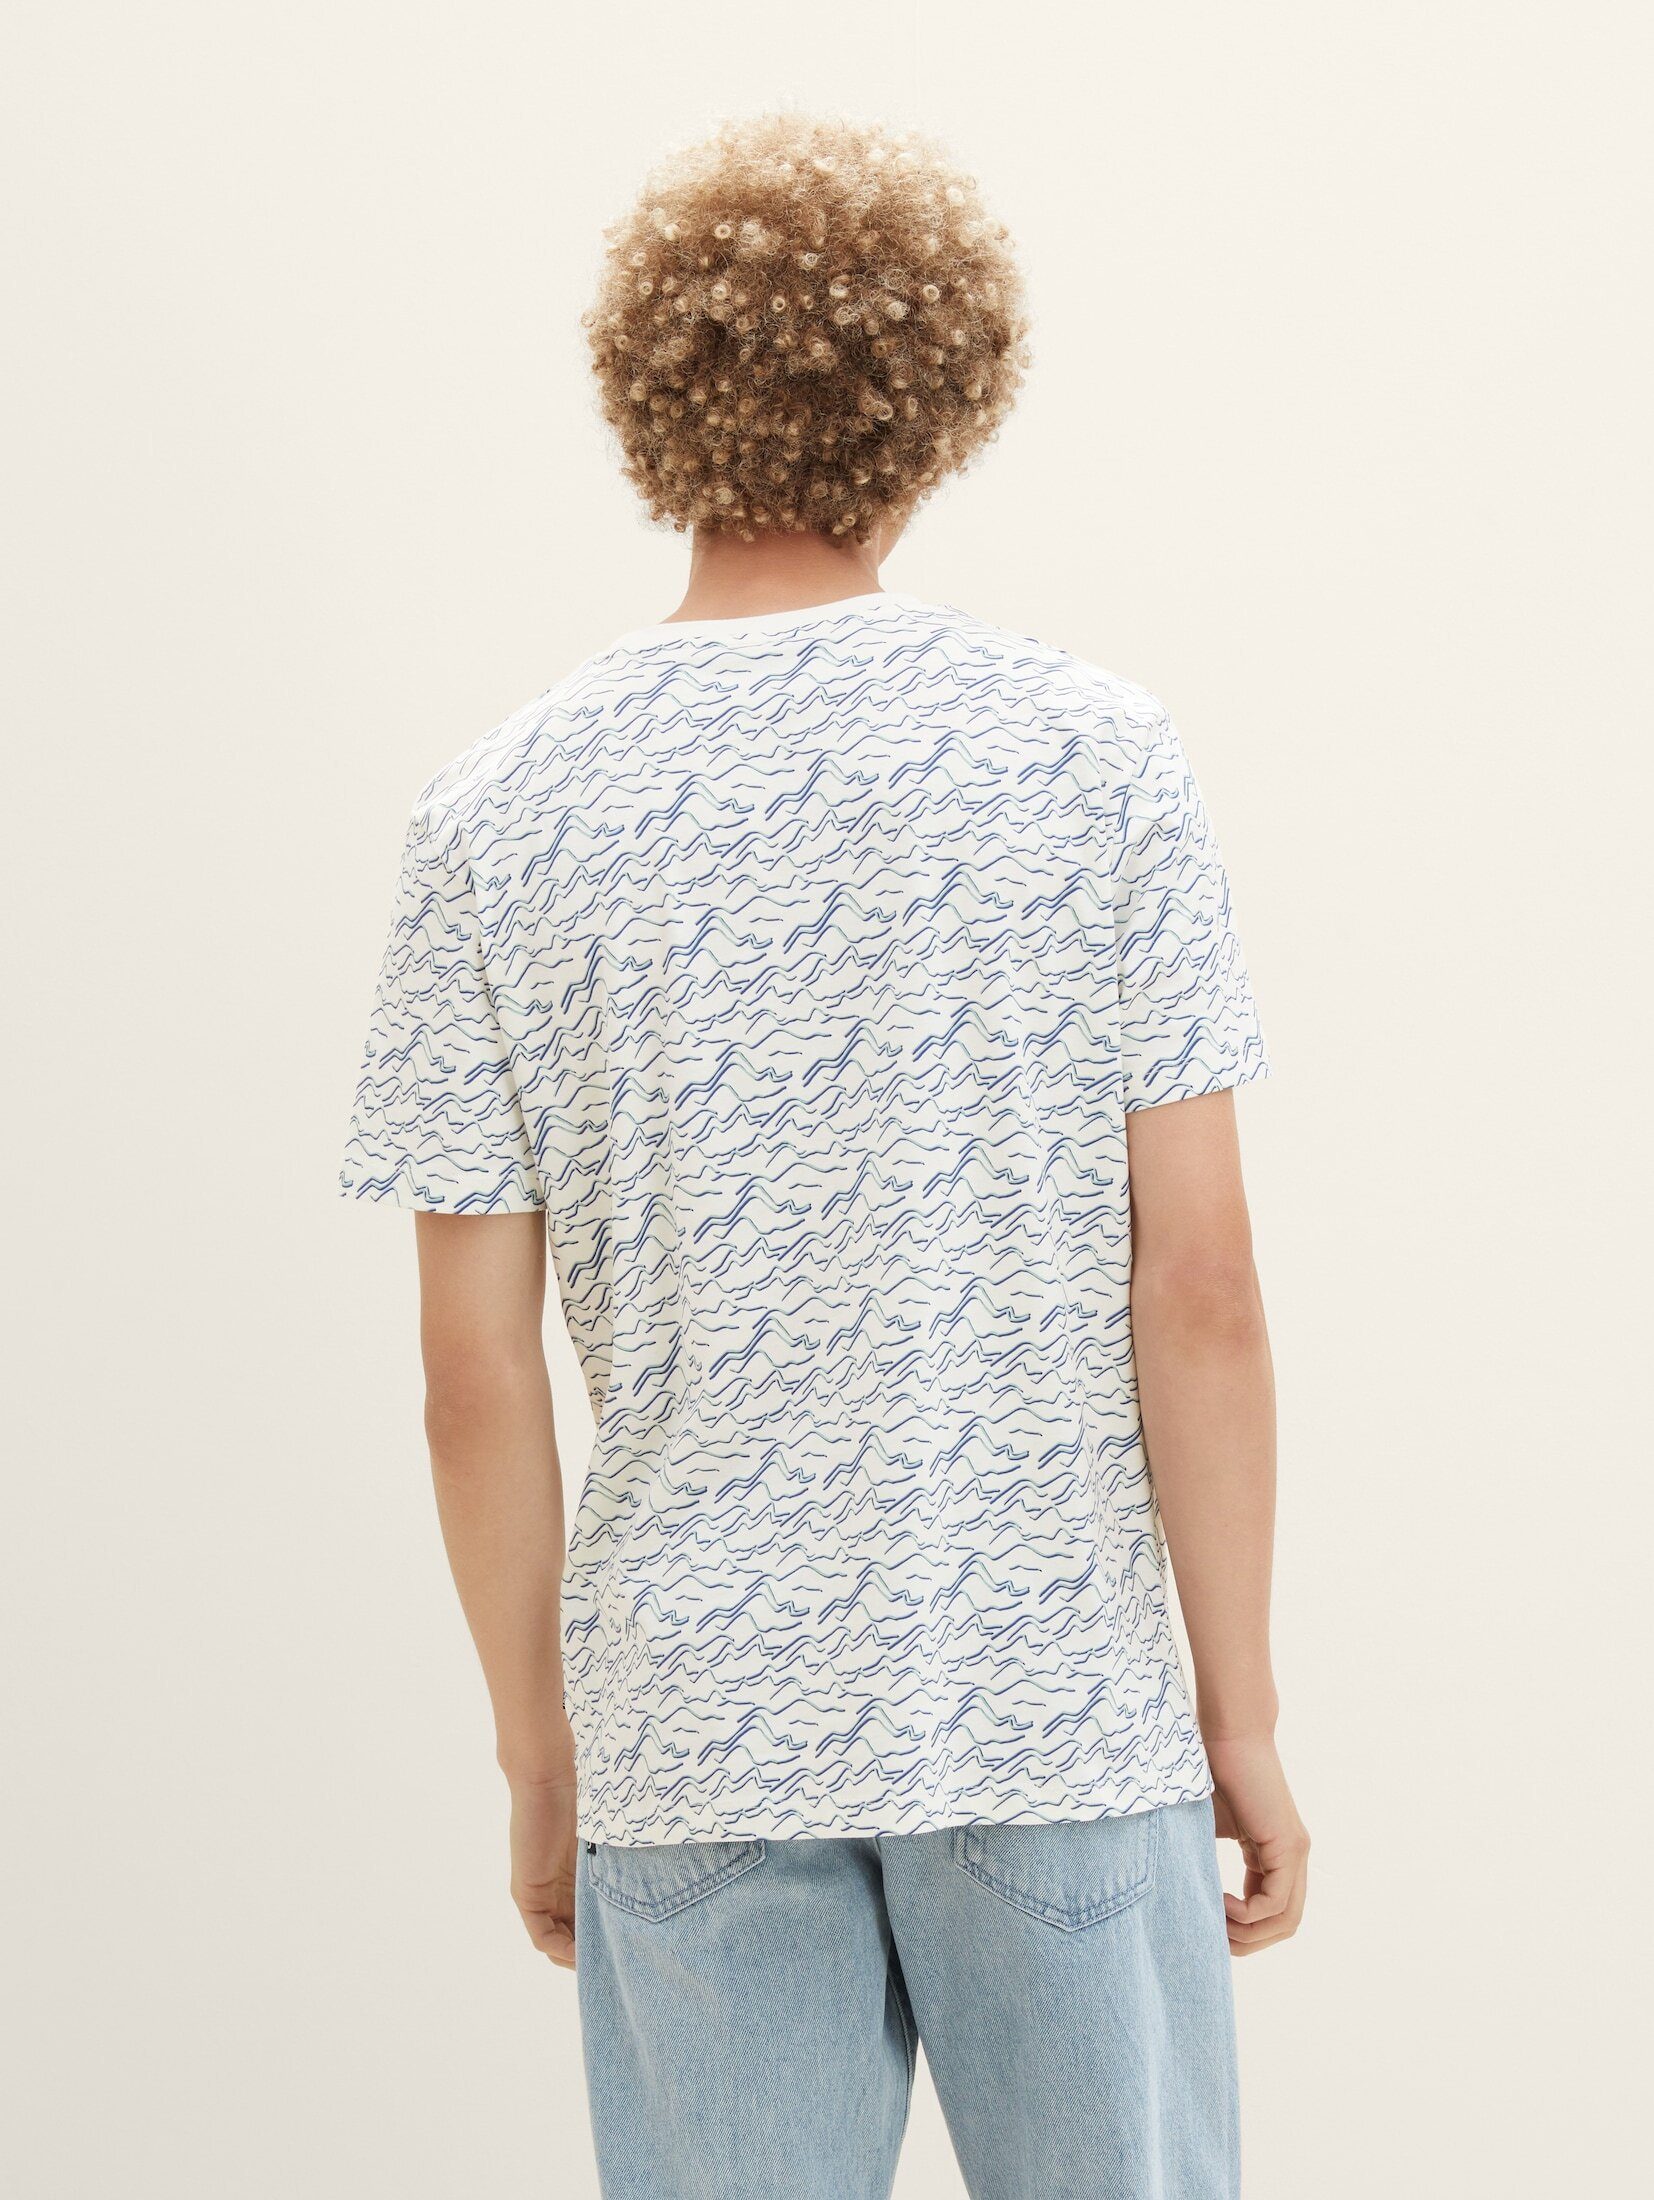 T-Shirt white mit print T-Shirt Allover-Print TAILOR TOM abstract Denim mountain